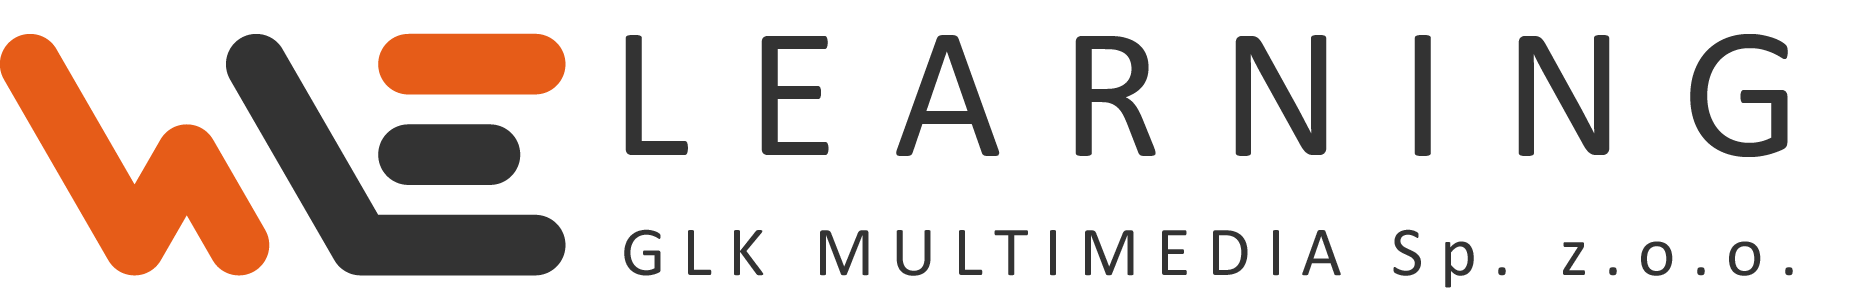 WeLearning logo poziome